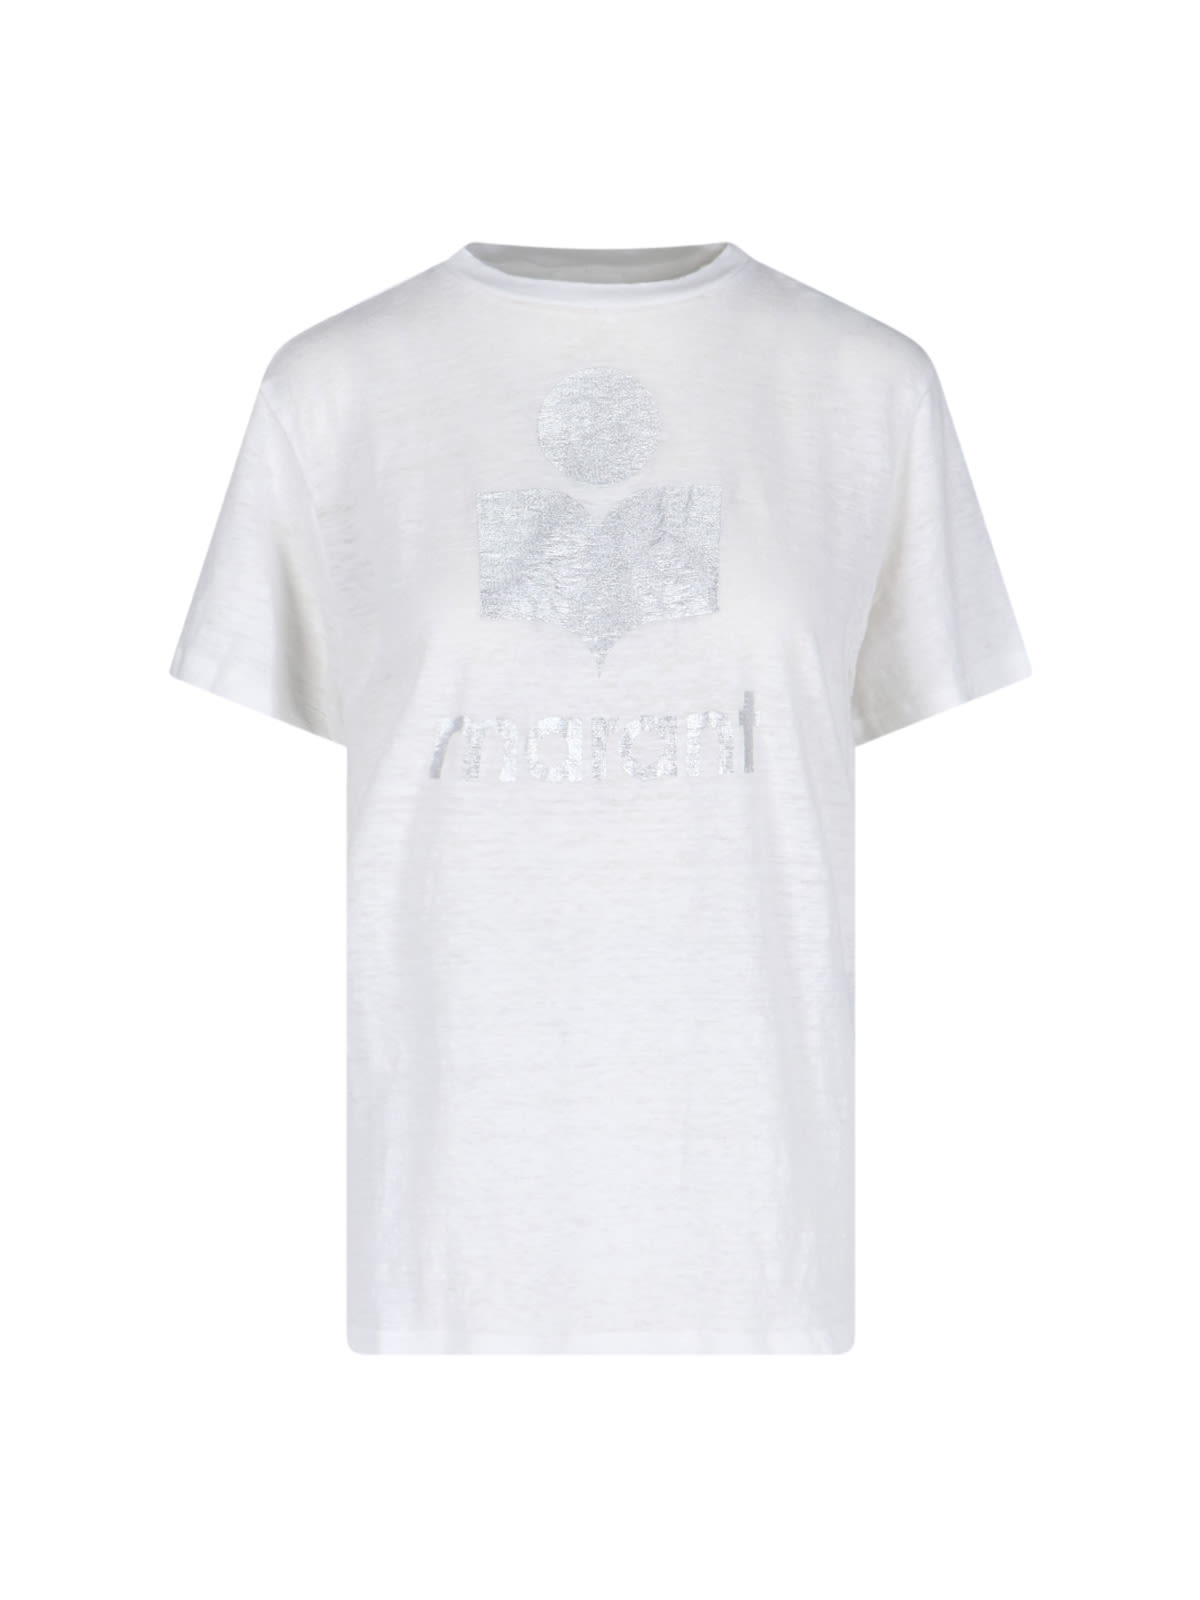 Marant Étoile Linen T-shirt